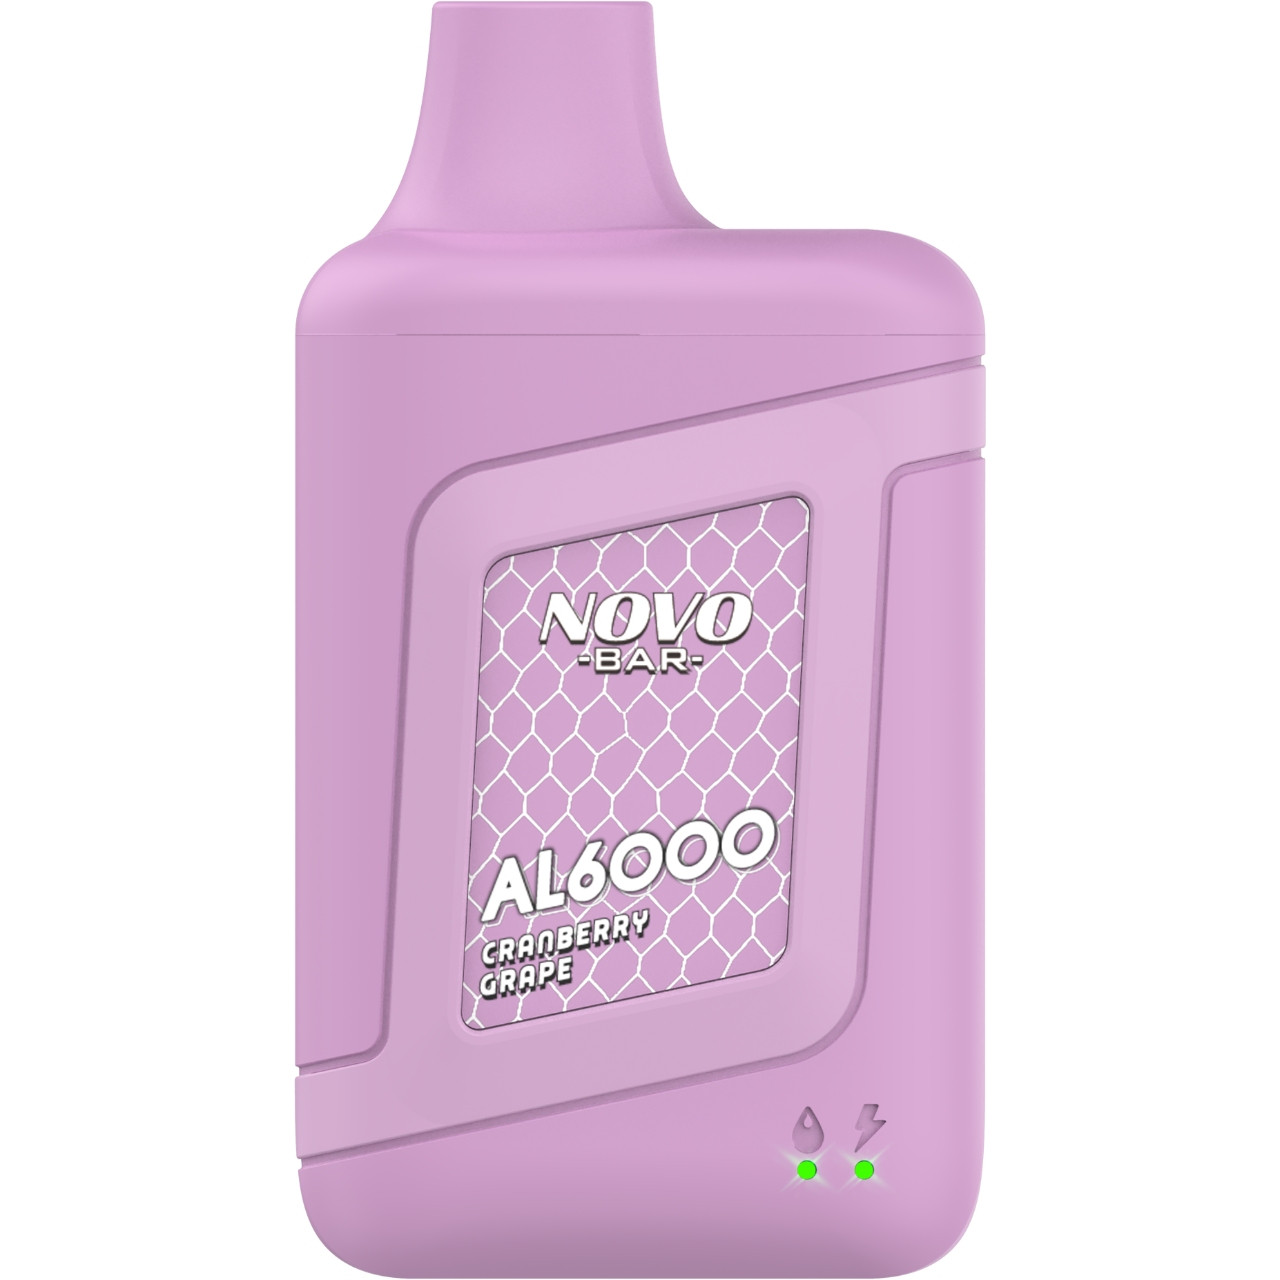 SMOK NOVO Bar AL6000 Disposable Device (6000 Puffs) -Cranberry Grape